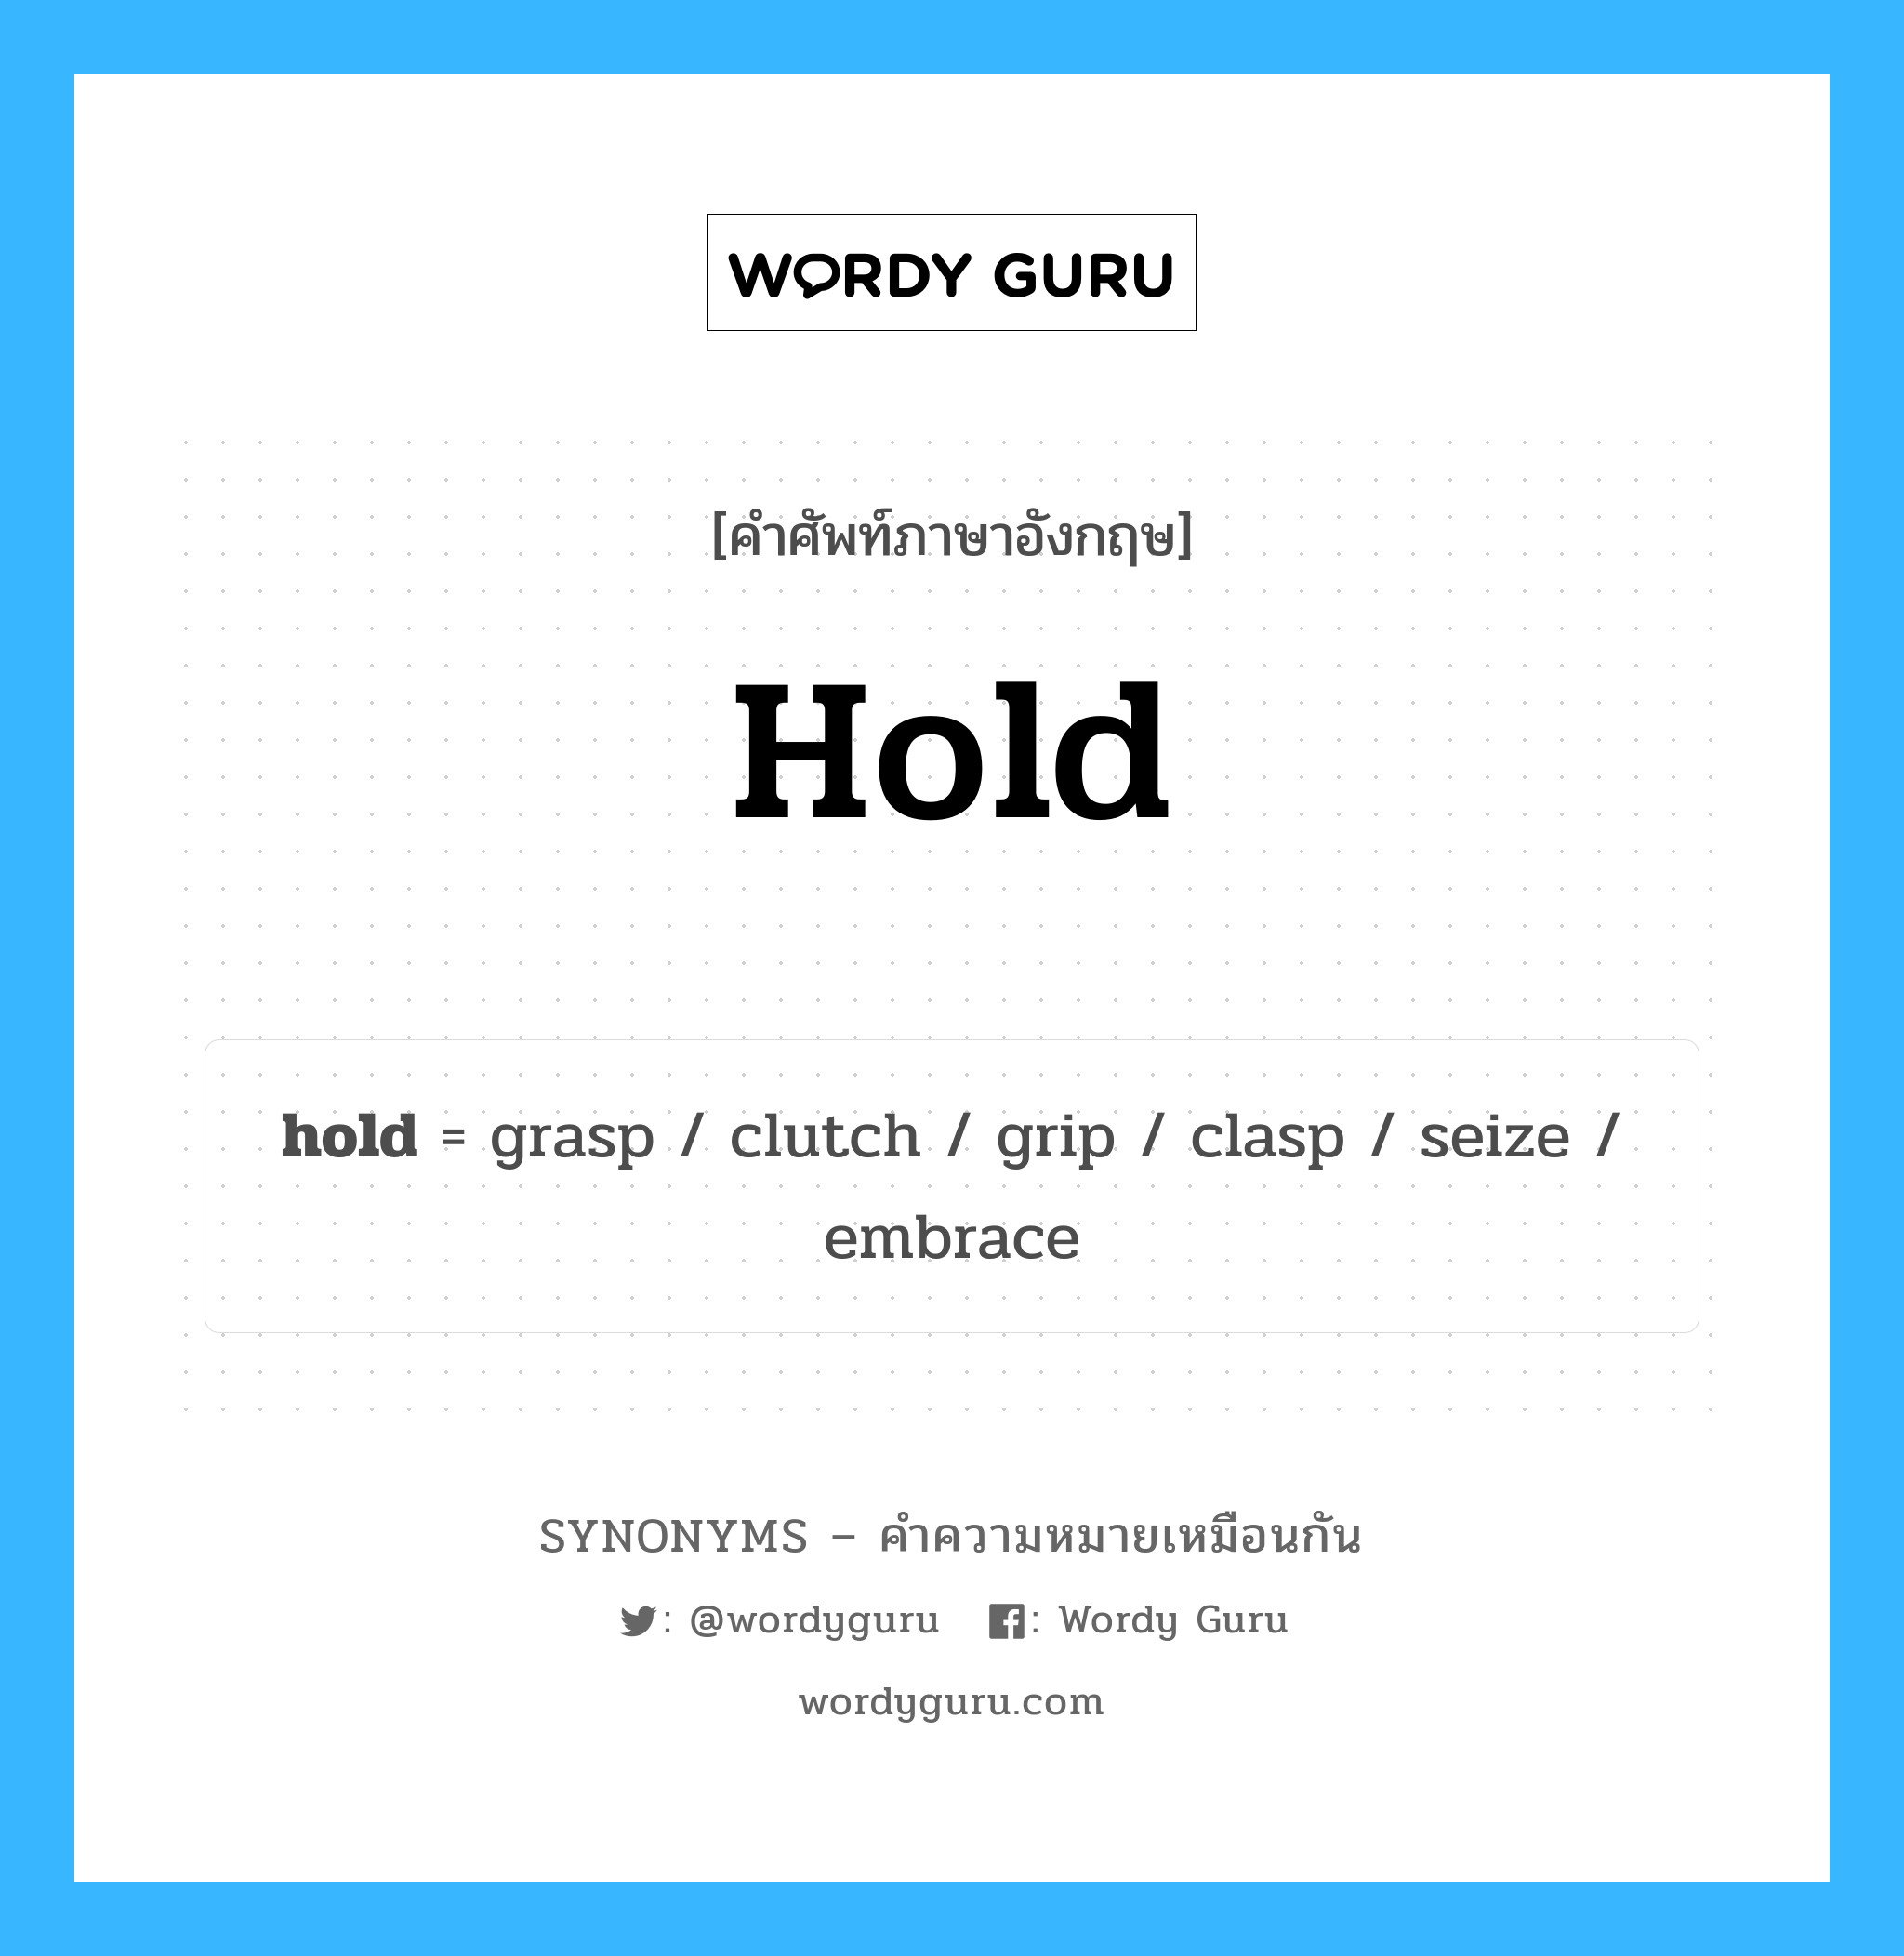 grasp เป็นหนึ่งใน understand และมีคำอื่น ๆ อีกดังนี้, คำศัพท์ภาษาอังกฤษ grasp ความหมายคล้ายกันกับ hold แปลว่า มีความเข้าใจ หมวด hold